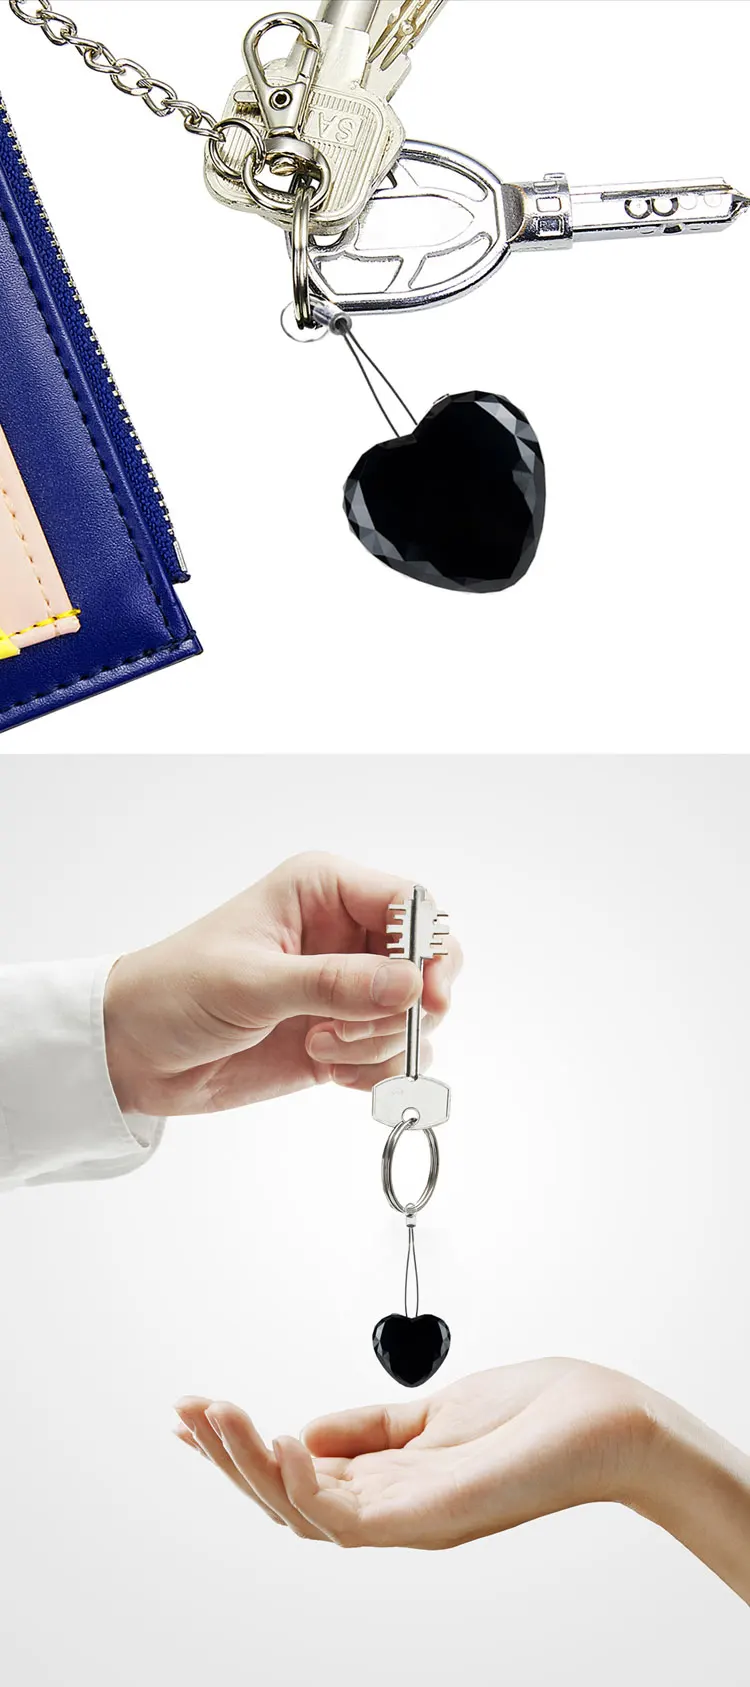 product-Hnsat-The Smallest Mini Long Distance Heart shape Hidden Spy Voice Recorder keychain-img-1